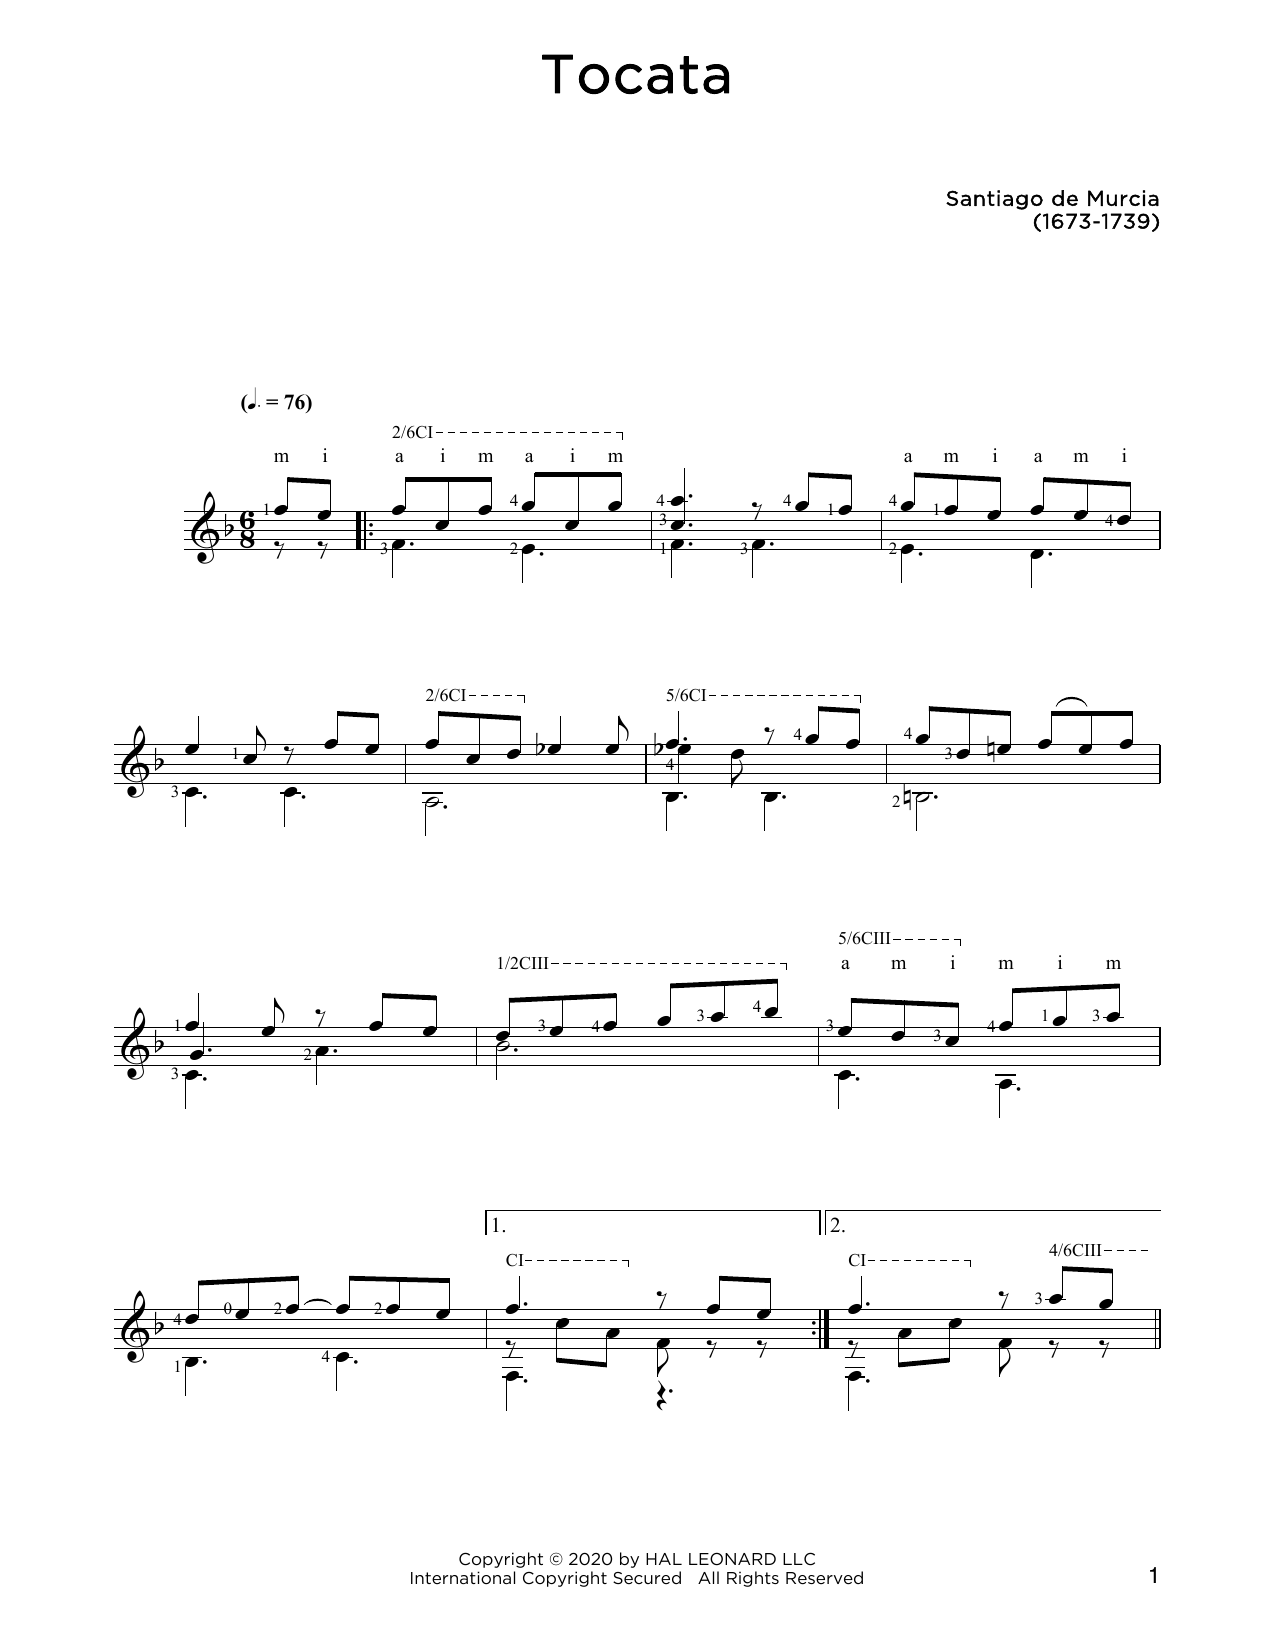 Santiago de Murcia Tocata Sheet Music Notes & Chords for Solo Guitar - Download or Print PDF